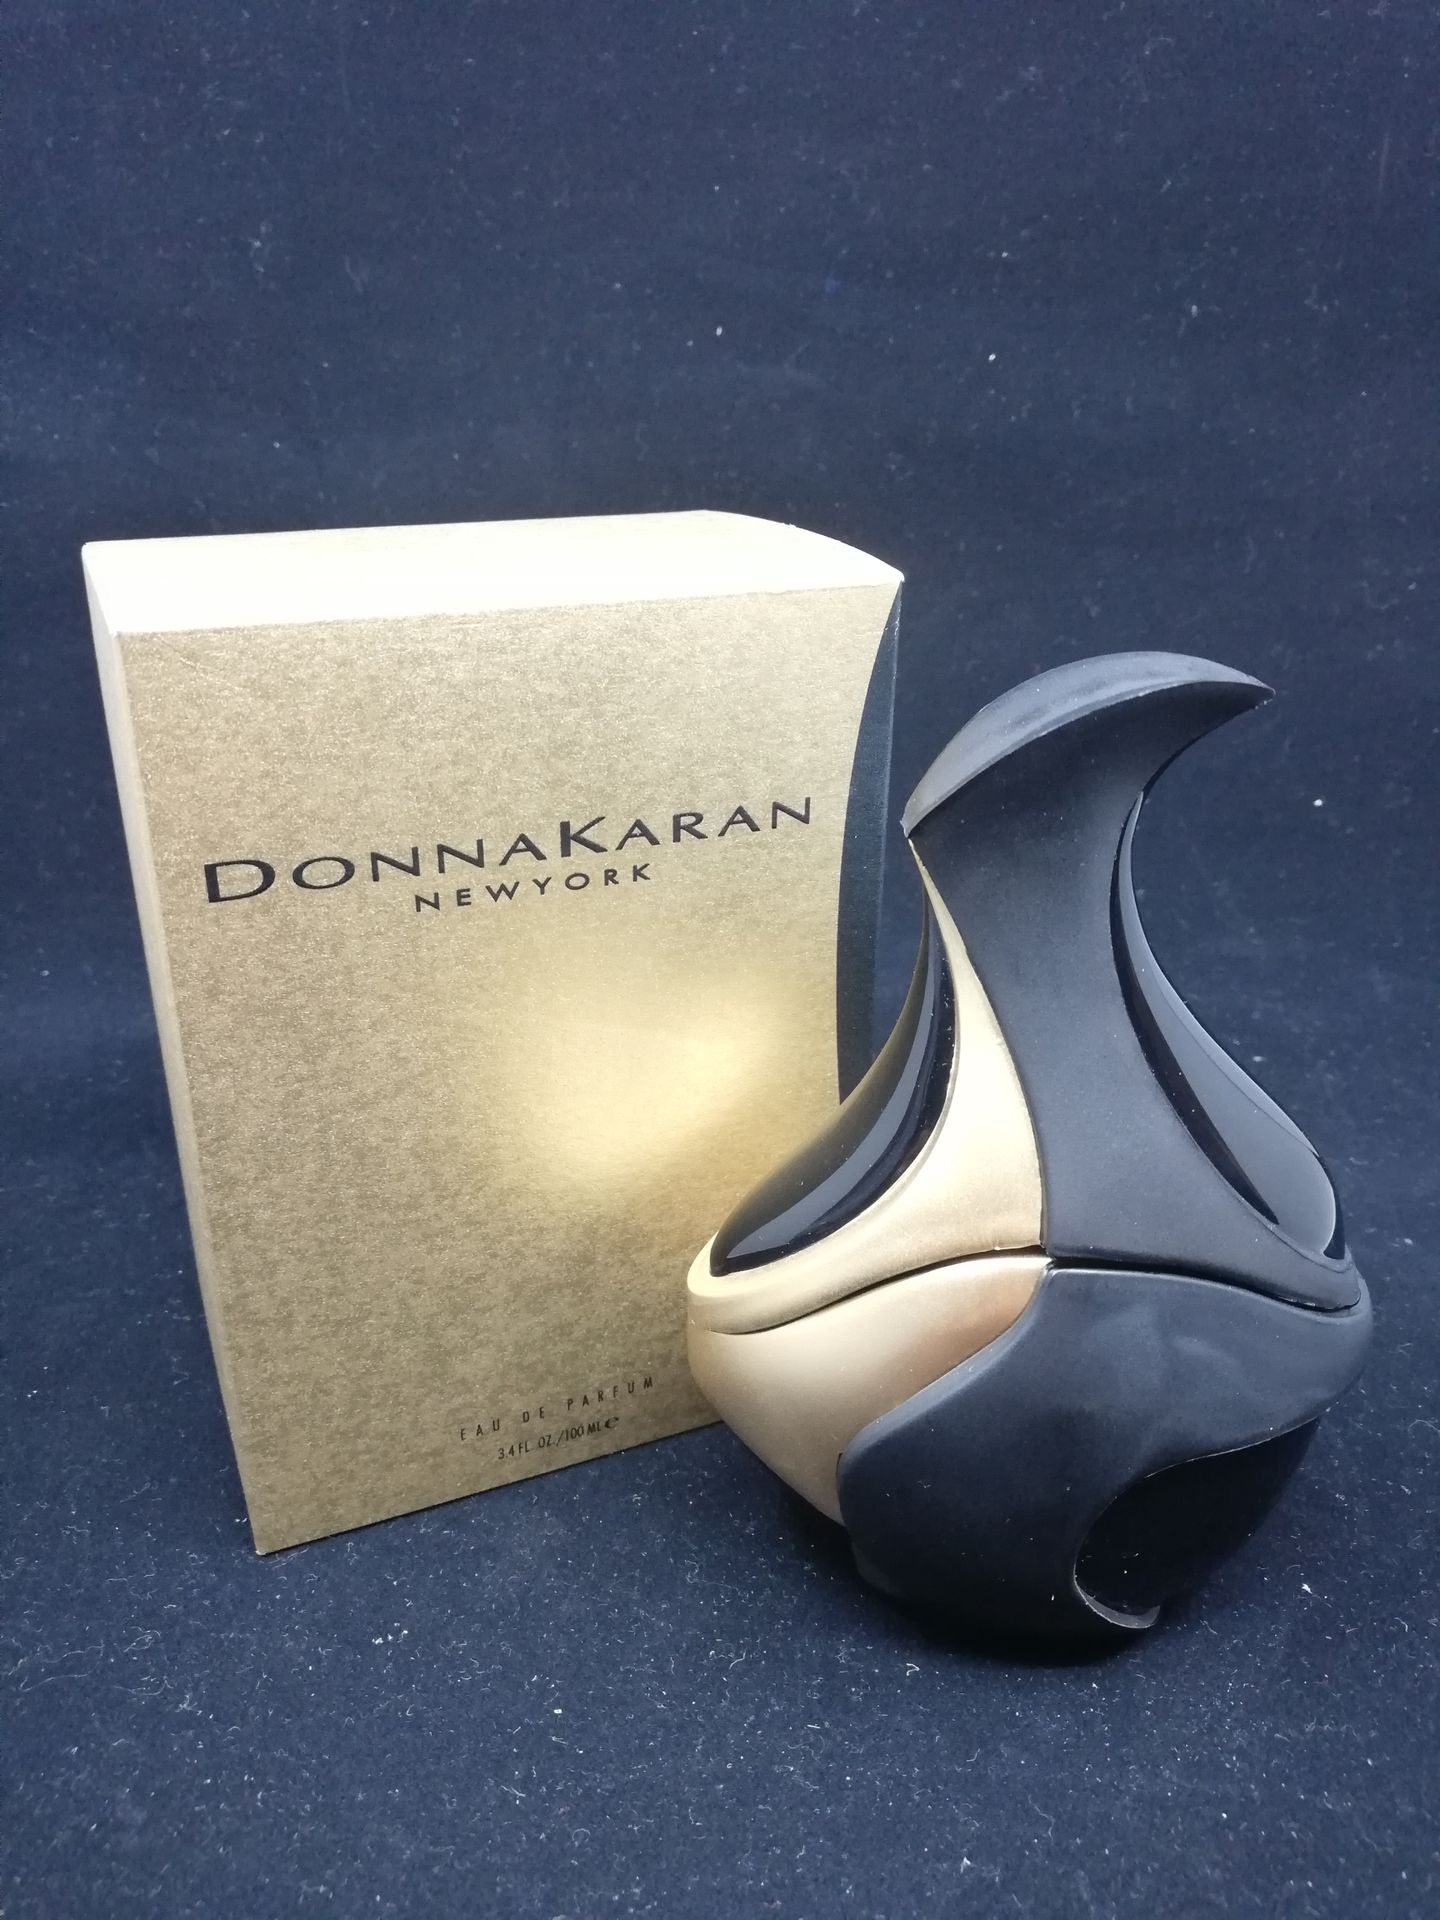 Null Donna Karan - "Pour Femme" - (1992)

Se presenta en una caja de cartón dora&hellip;